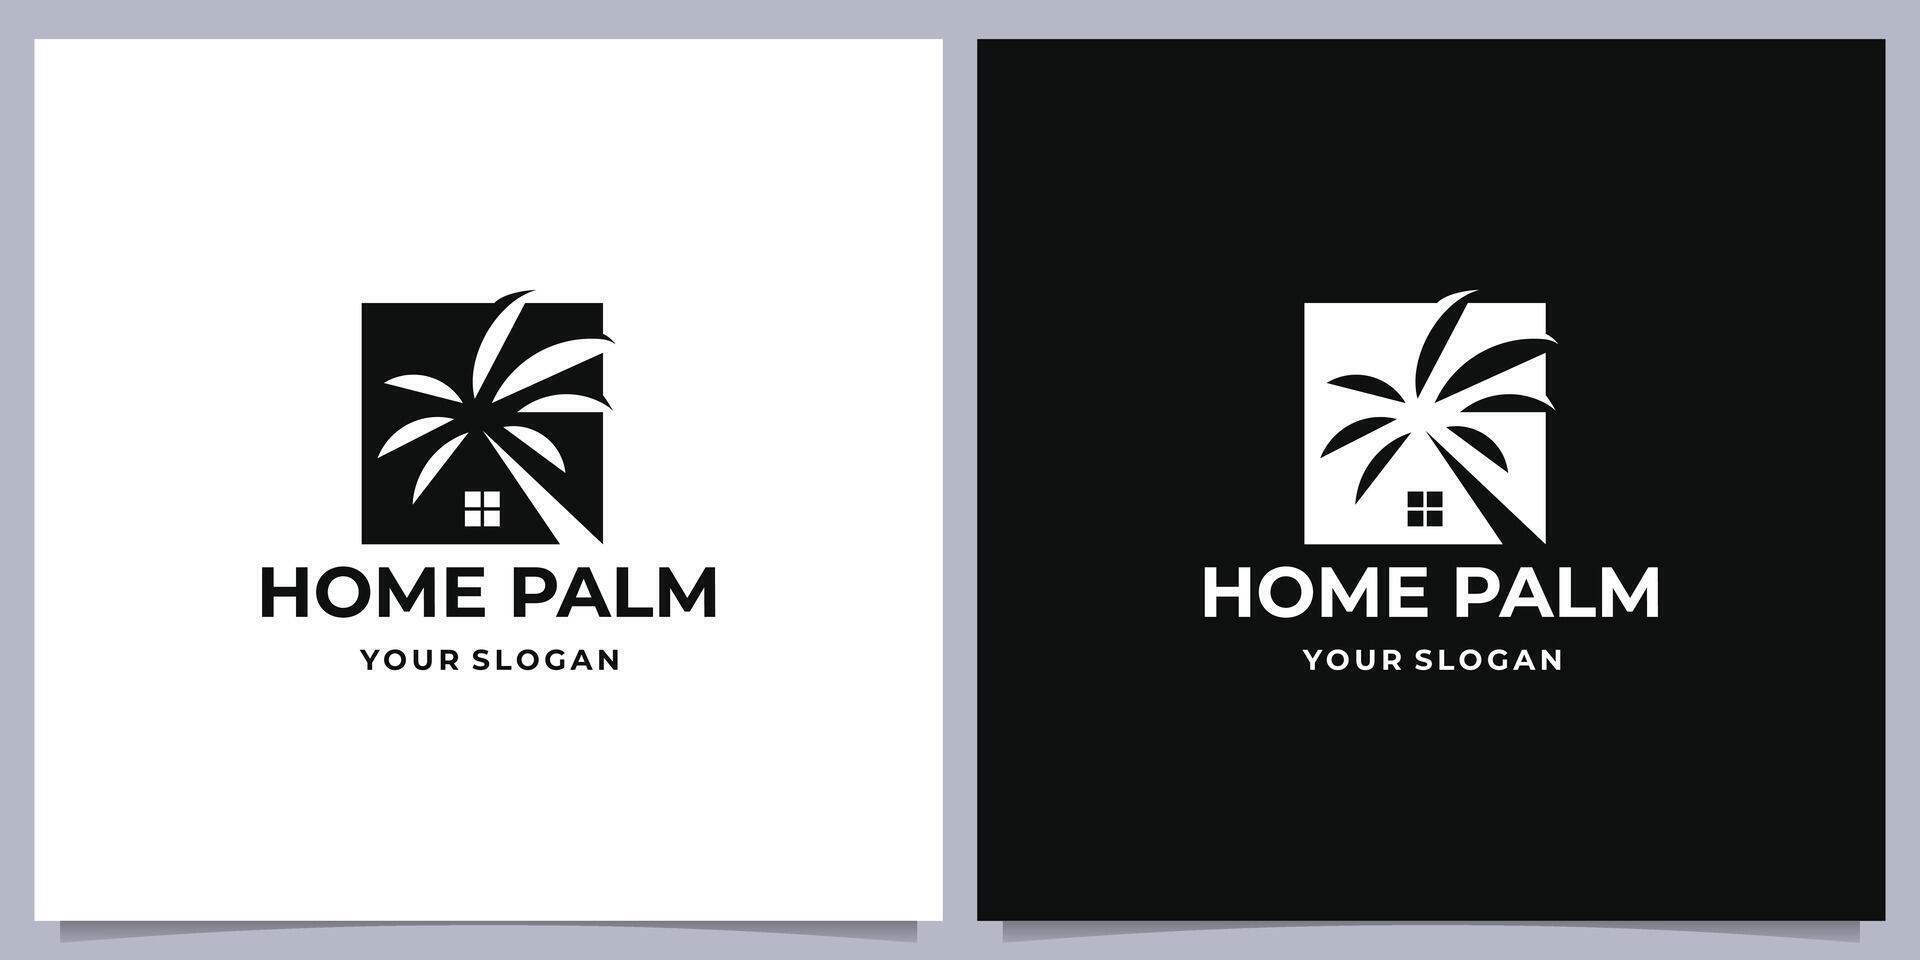 unique palm home logo in negative space design inspiration. luxury palm leaf concept. vector